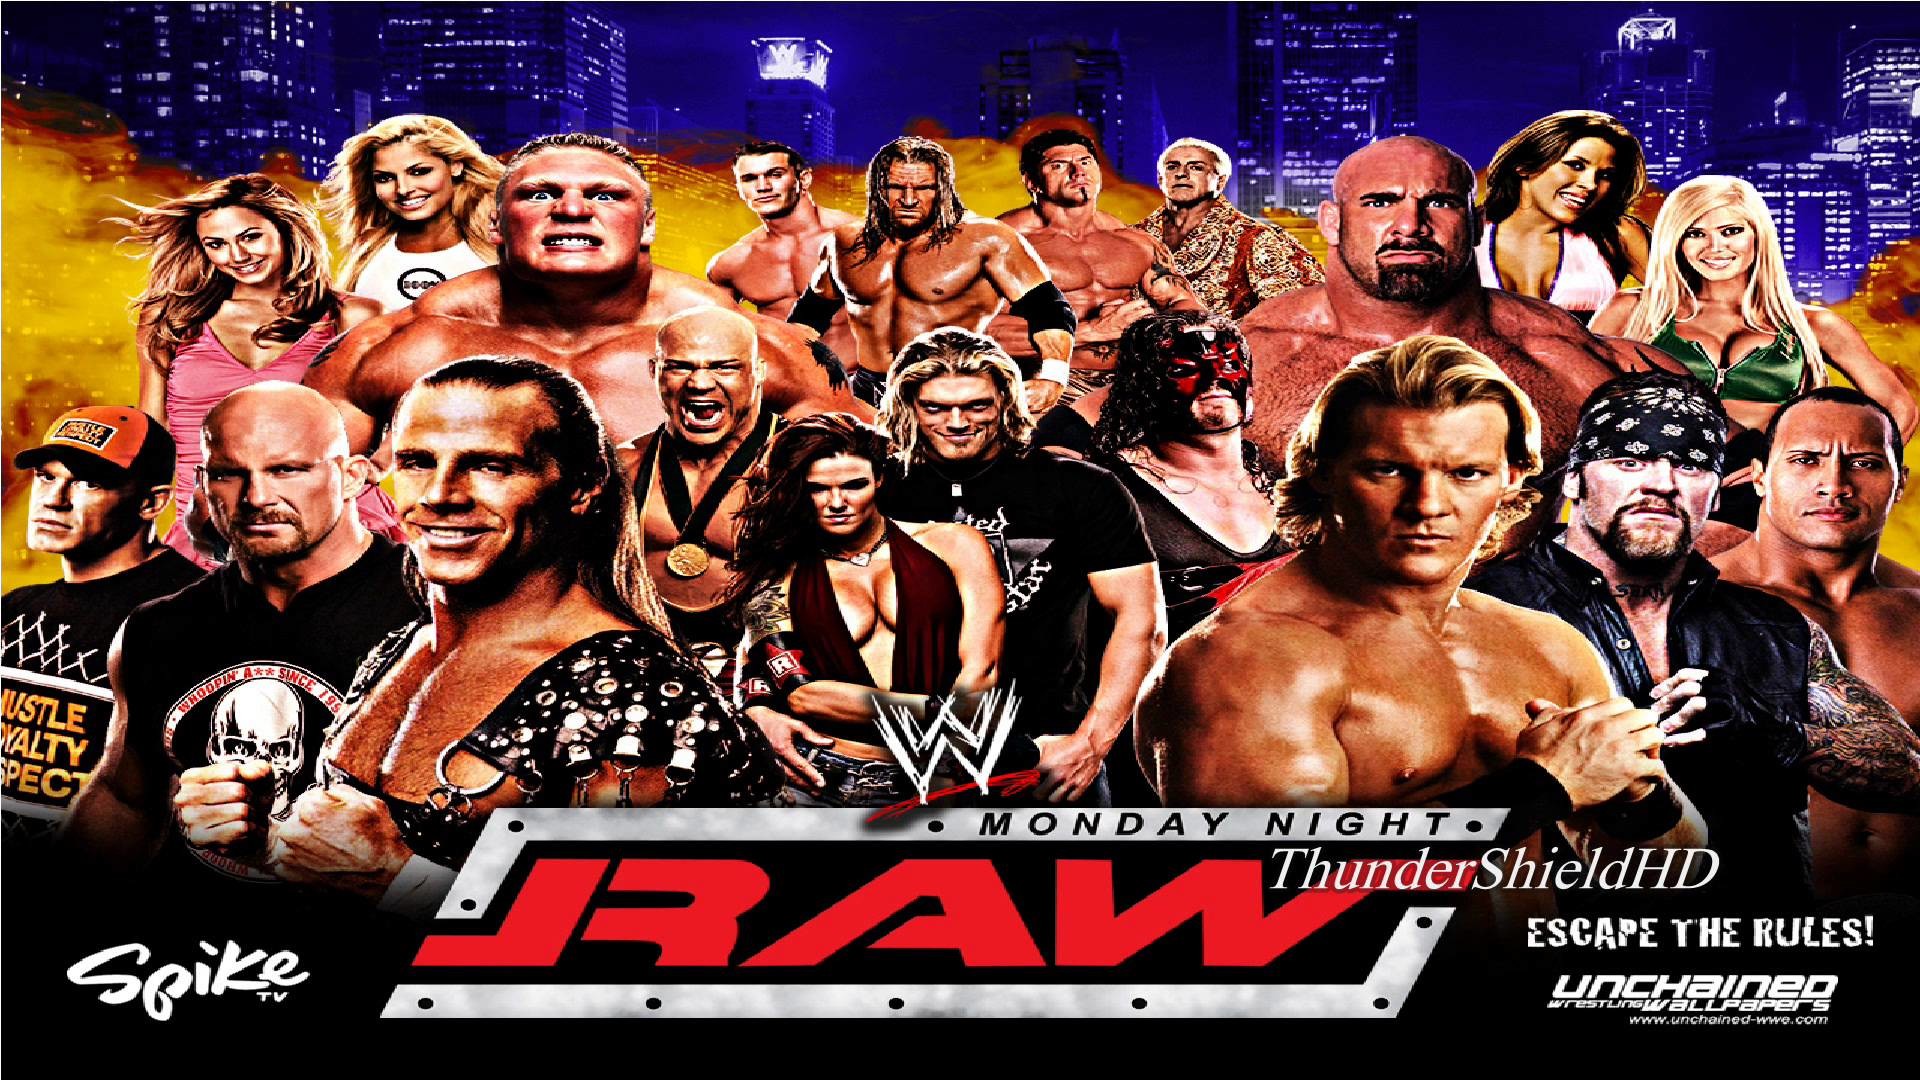 1920x1080 WWE Monday Night Raw Theme Song 2002-2006 "Across The Nation" Full Version  á´´á´° - YouTube